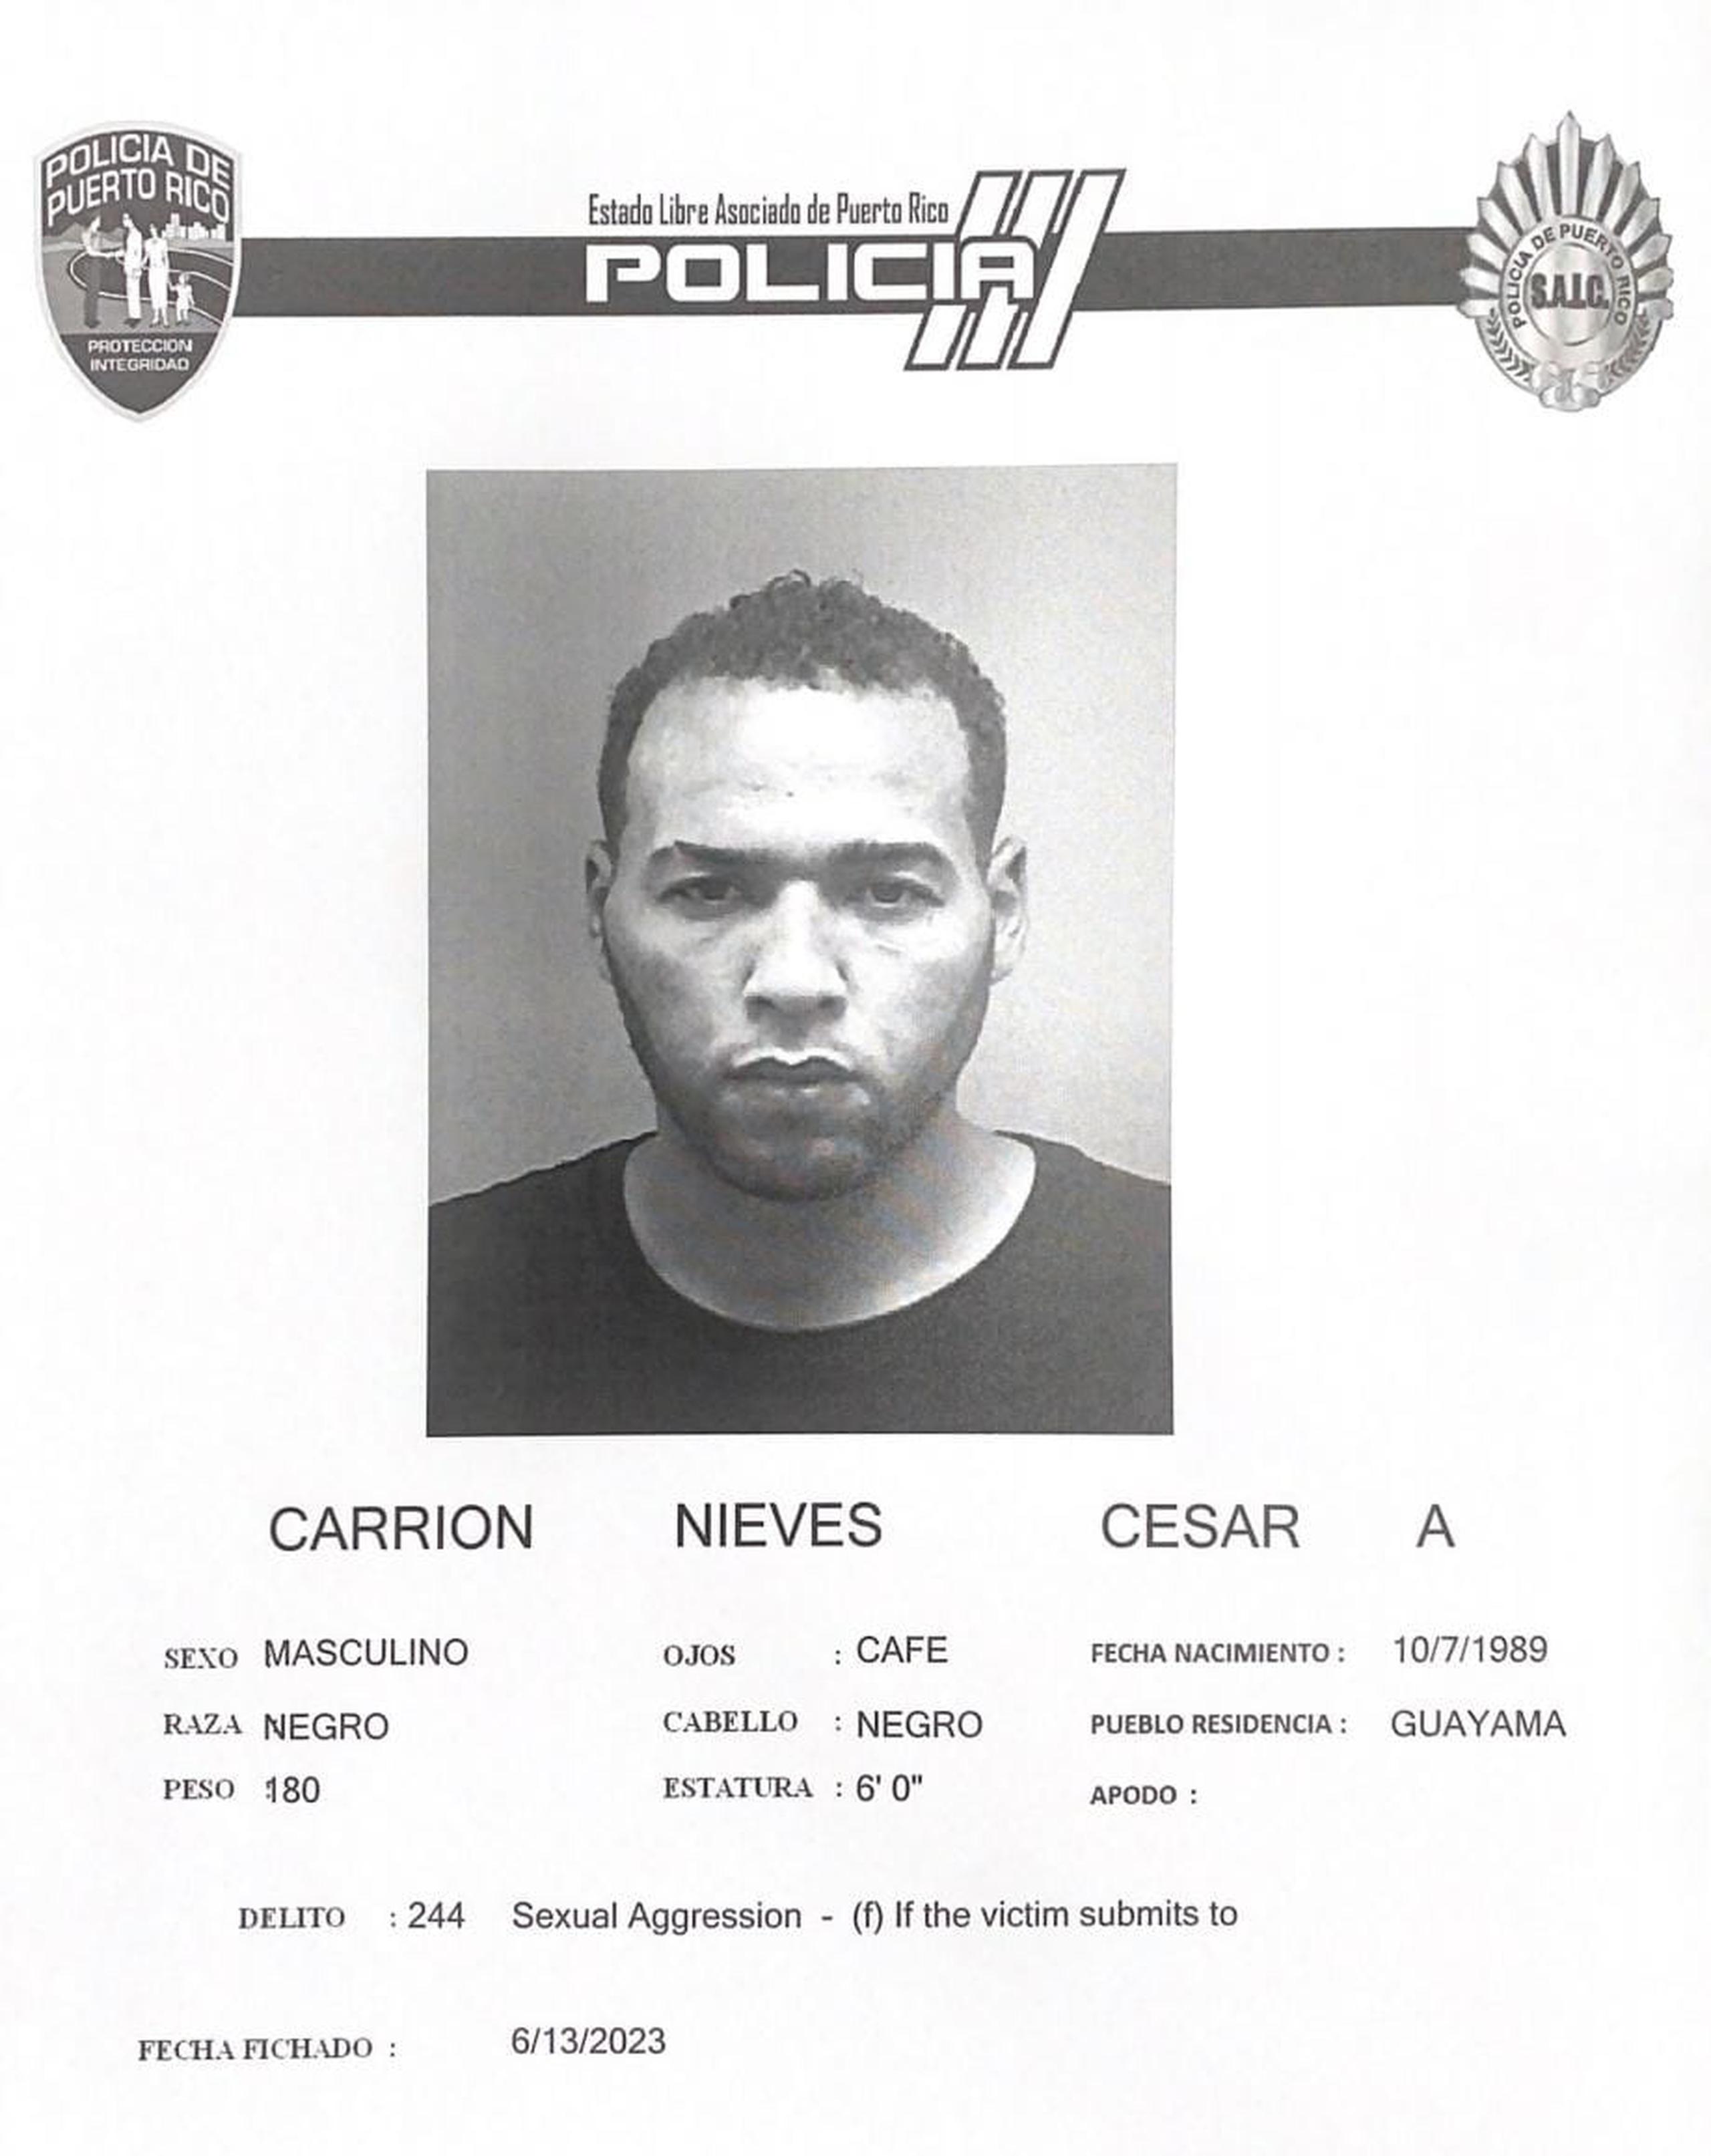 César A. Carrión Nieves enfrenta cargos por agresión sexual, maltrato de menores y apropiación ilegal.